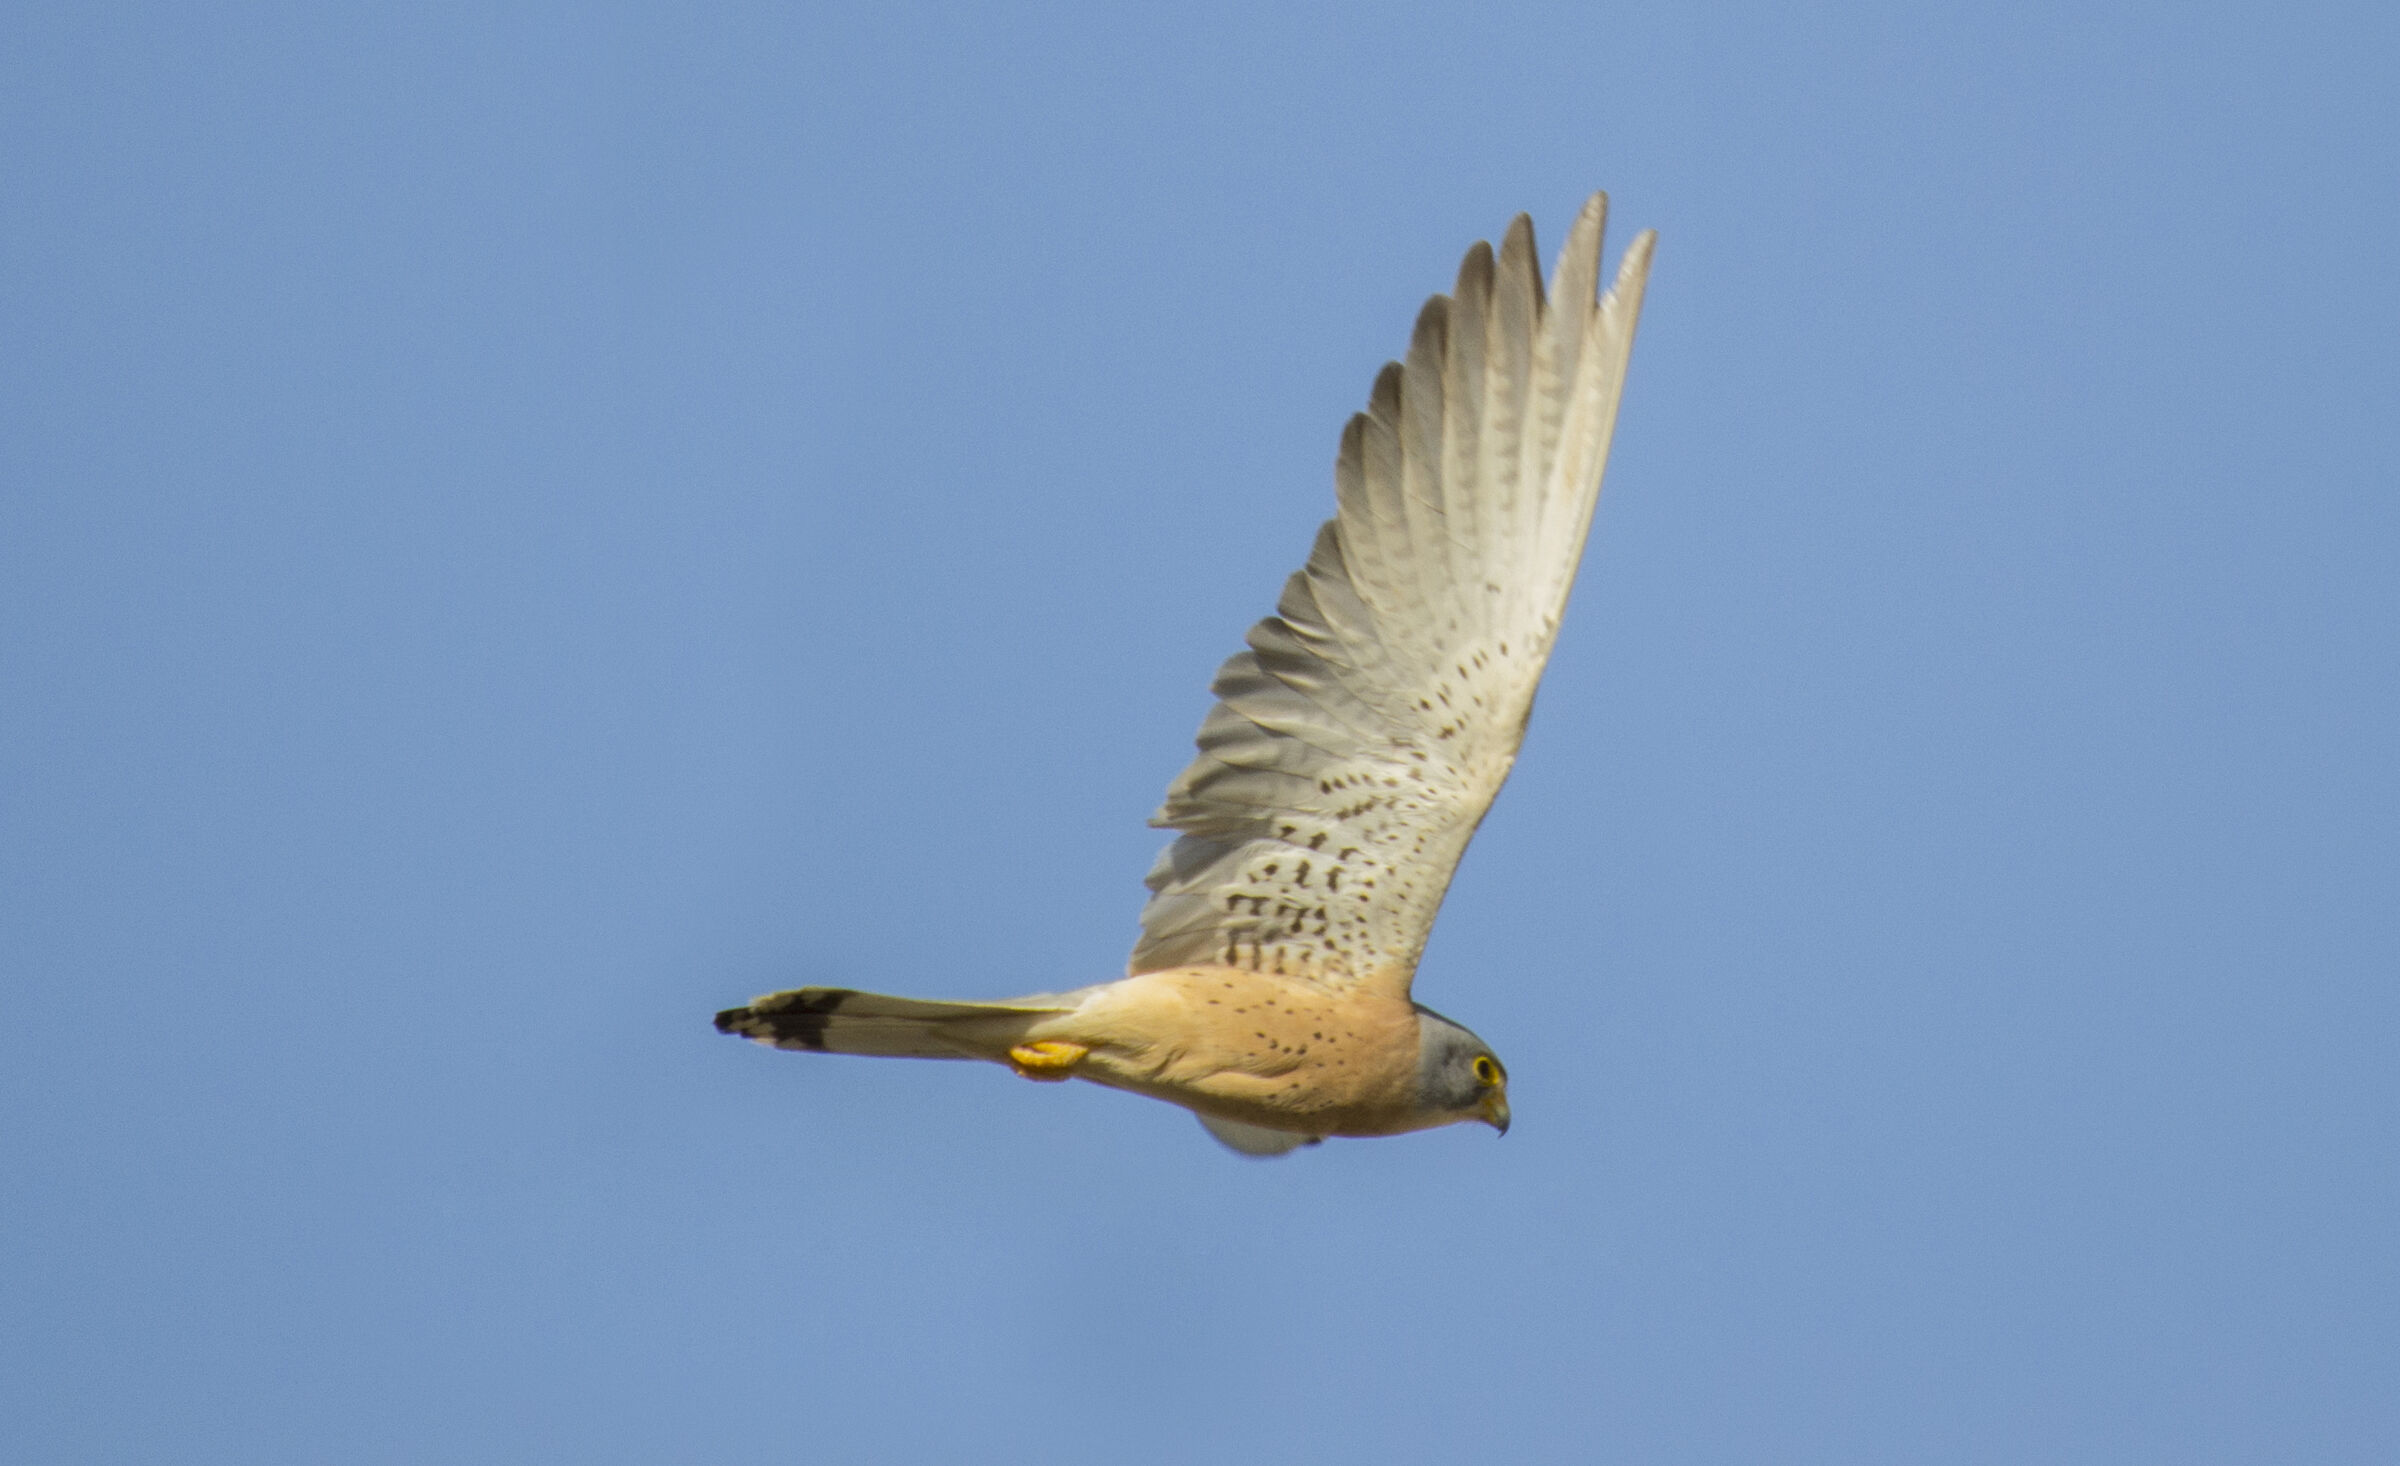 The flight of the Falco Grillaio...